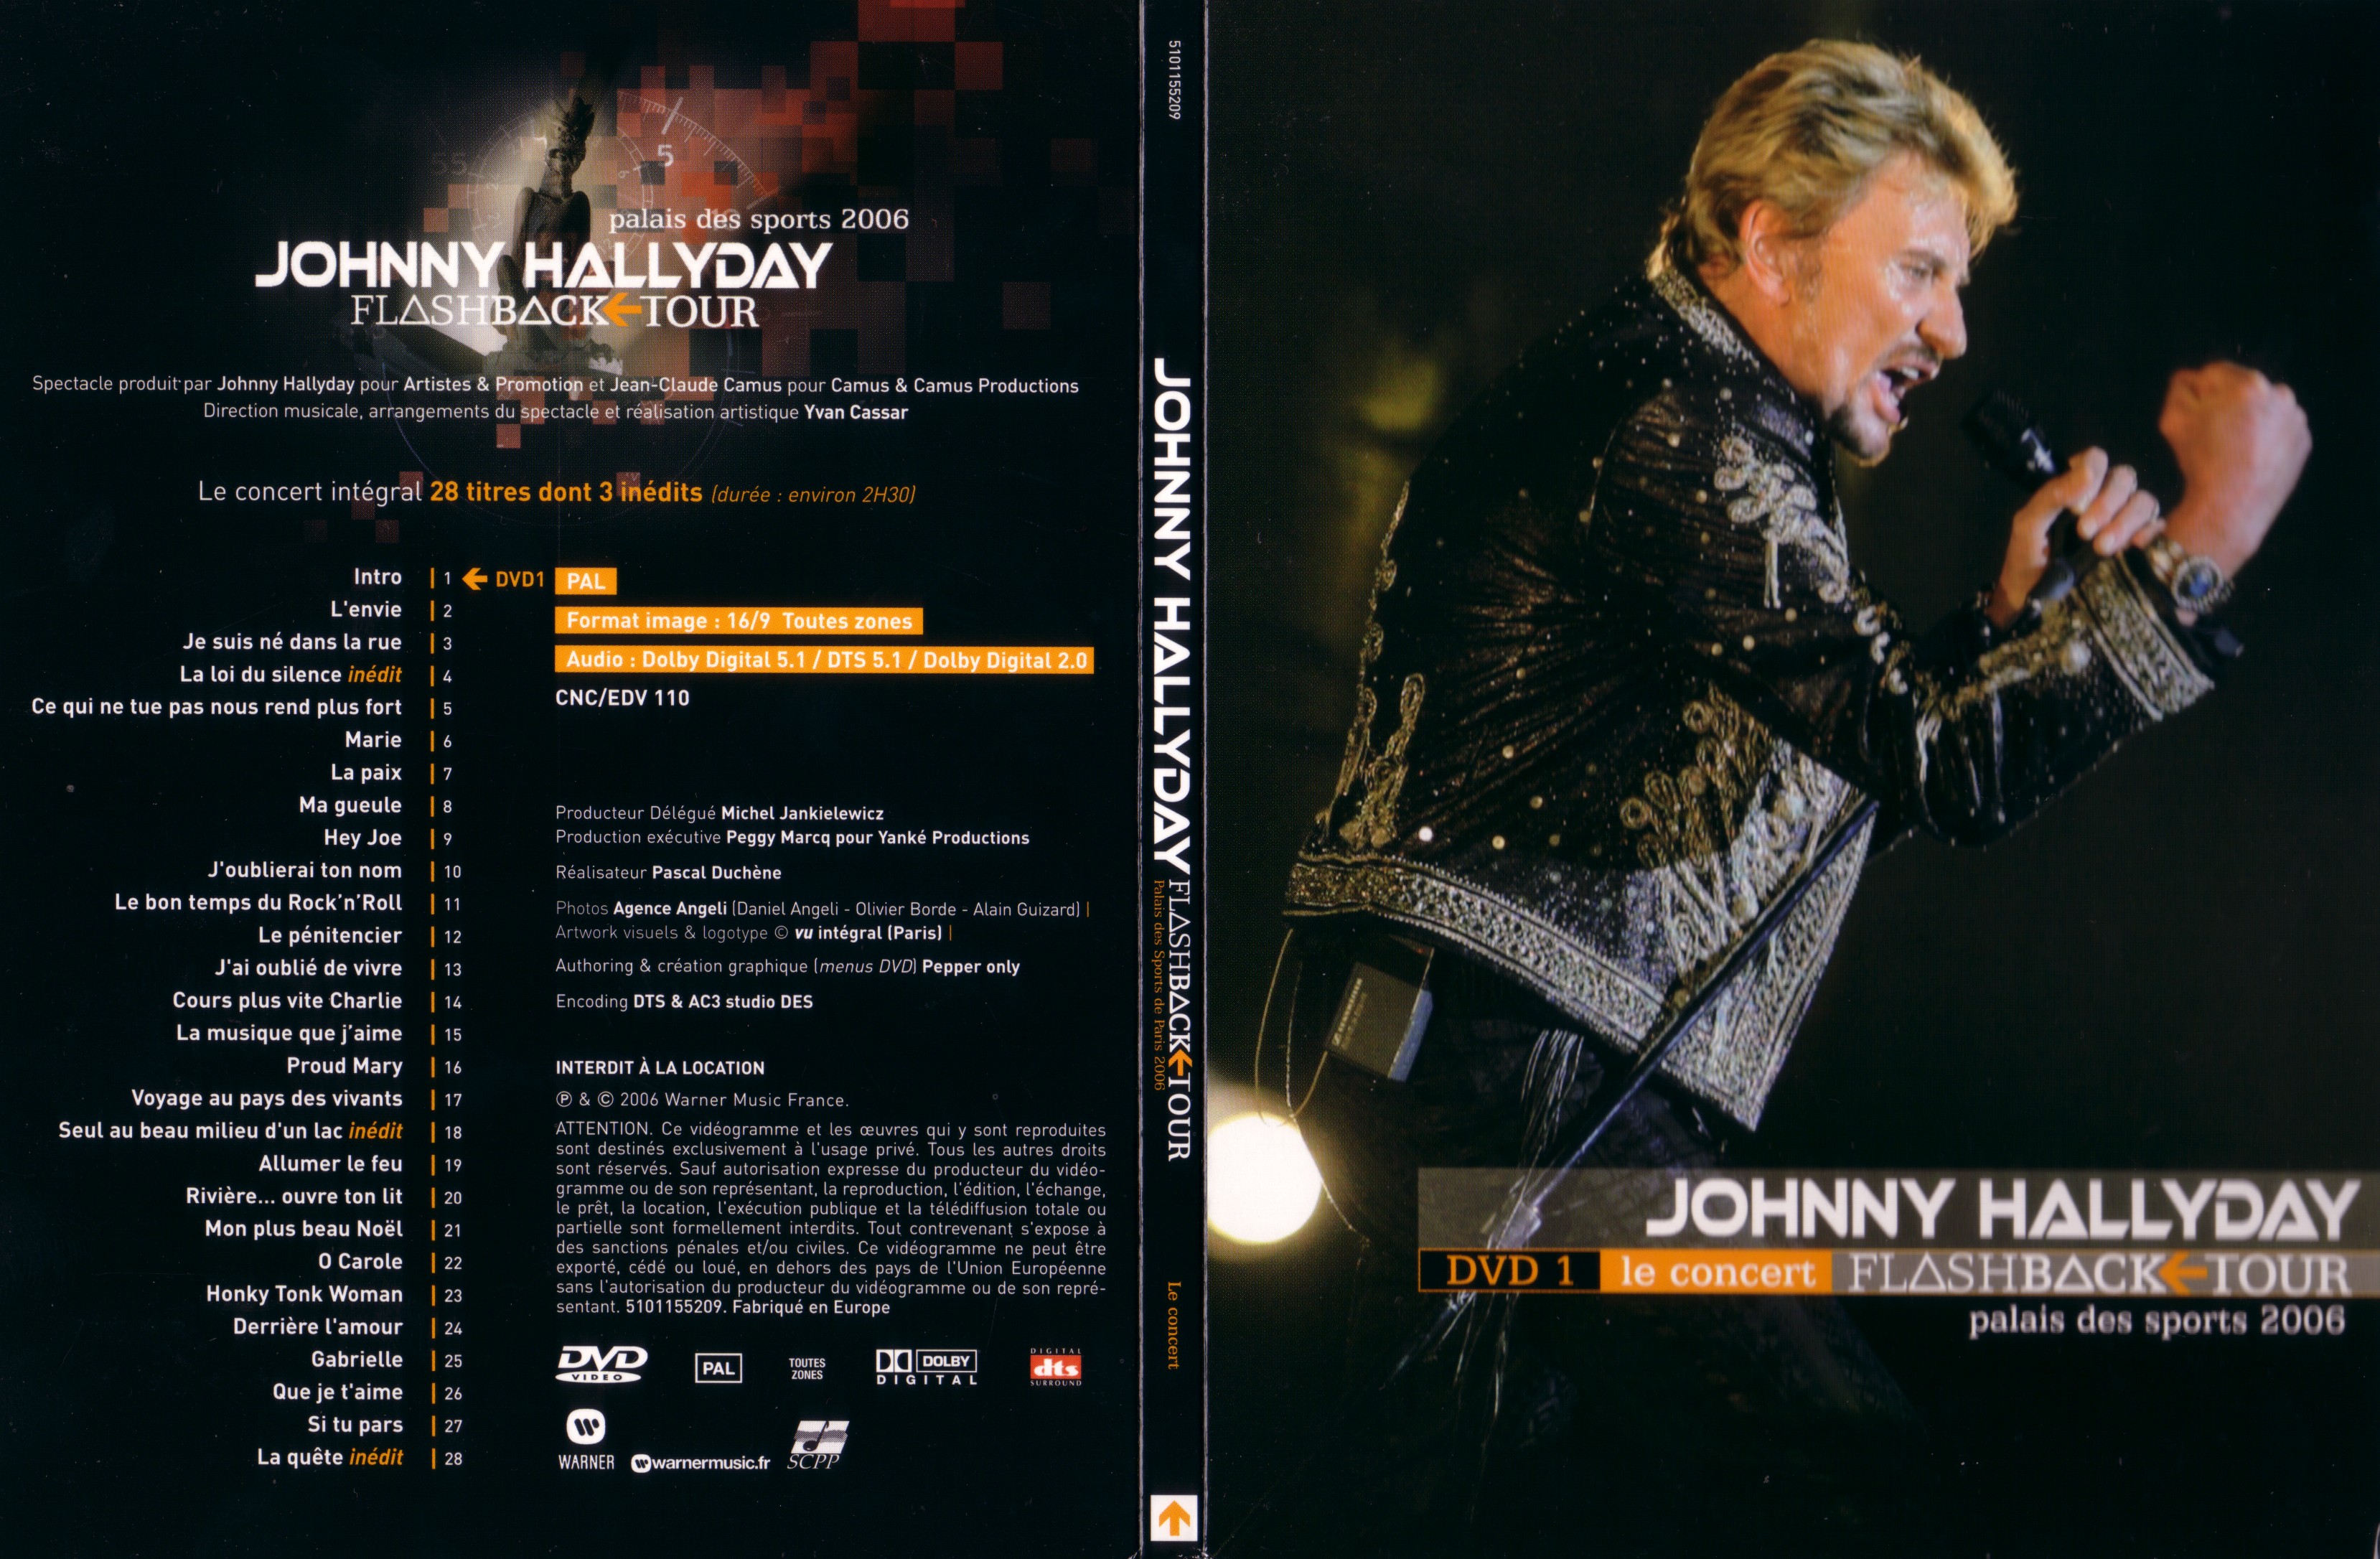 Jaquette DVD Johnny Hallyday Flashback Tour 2006 DVD 1